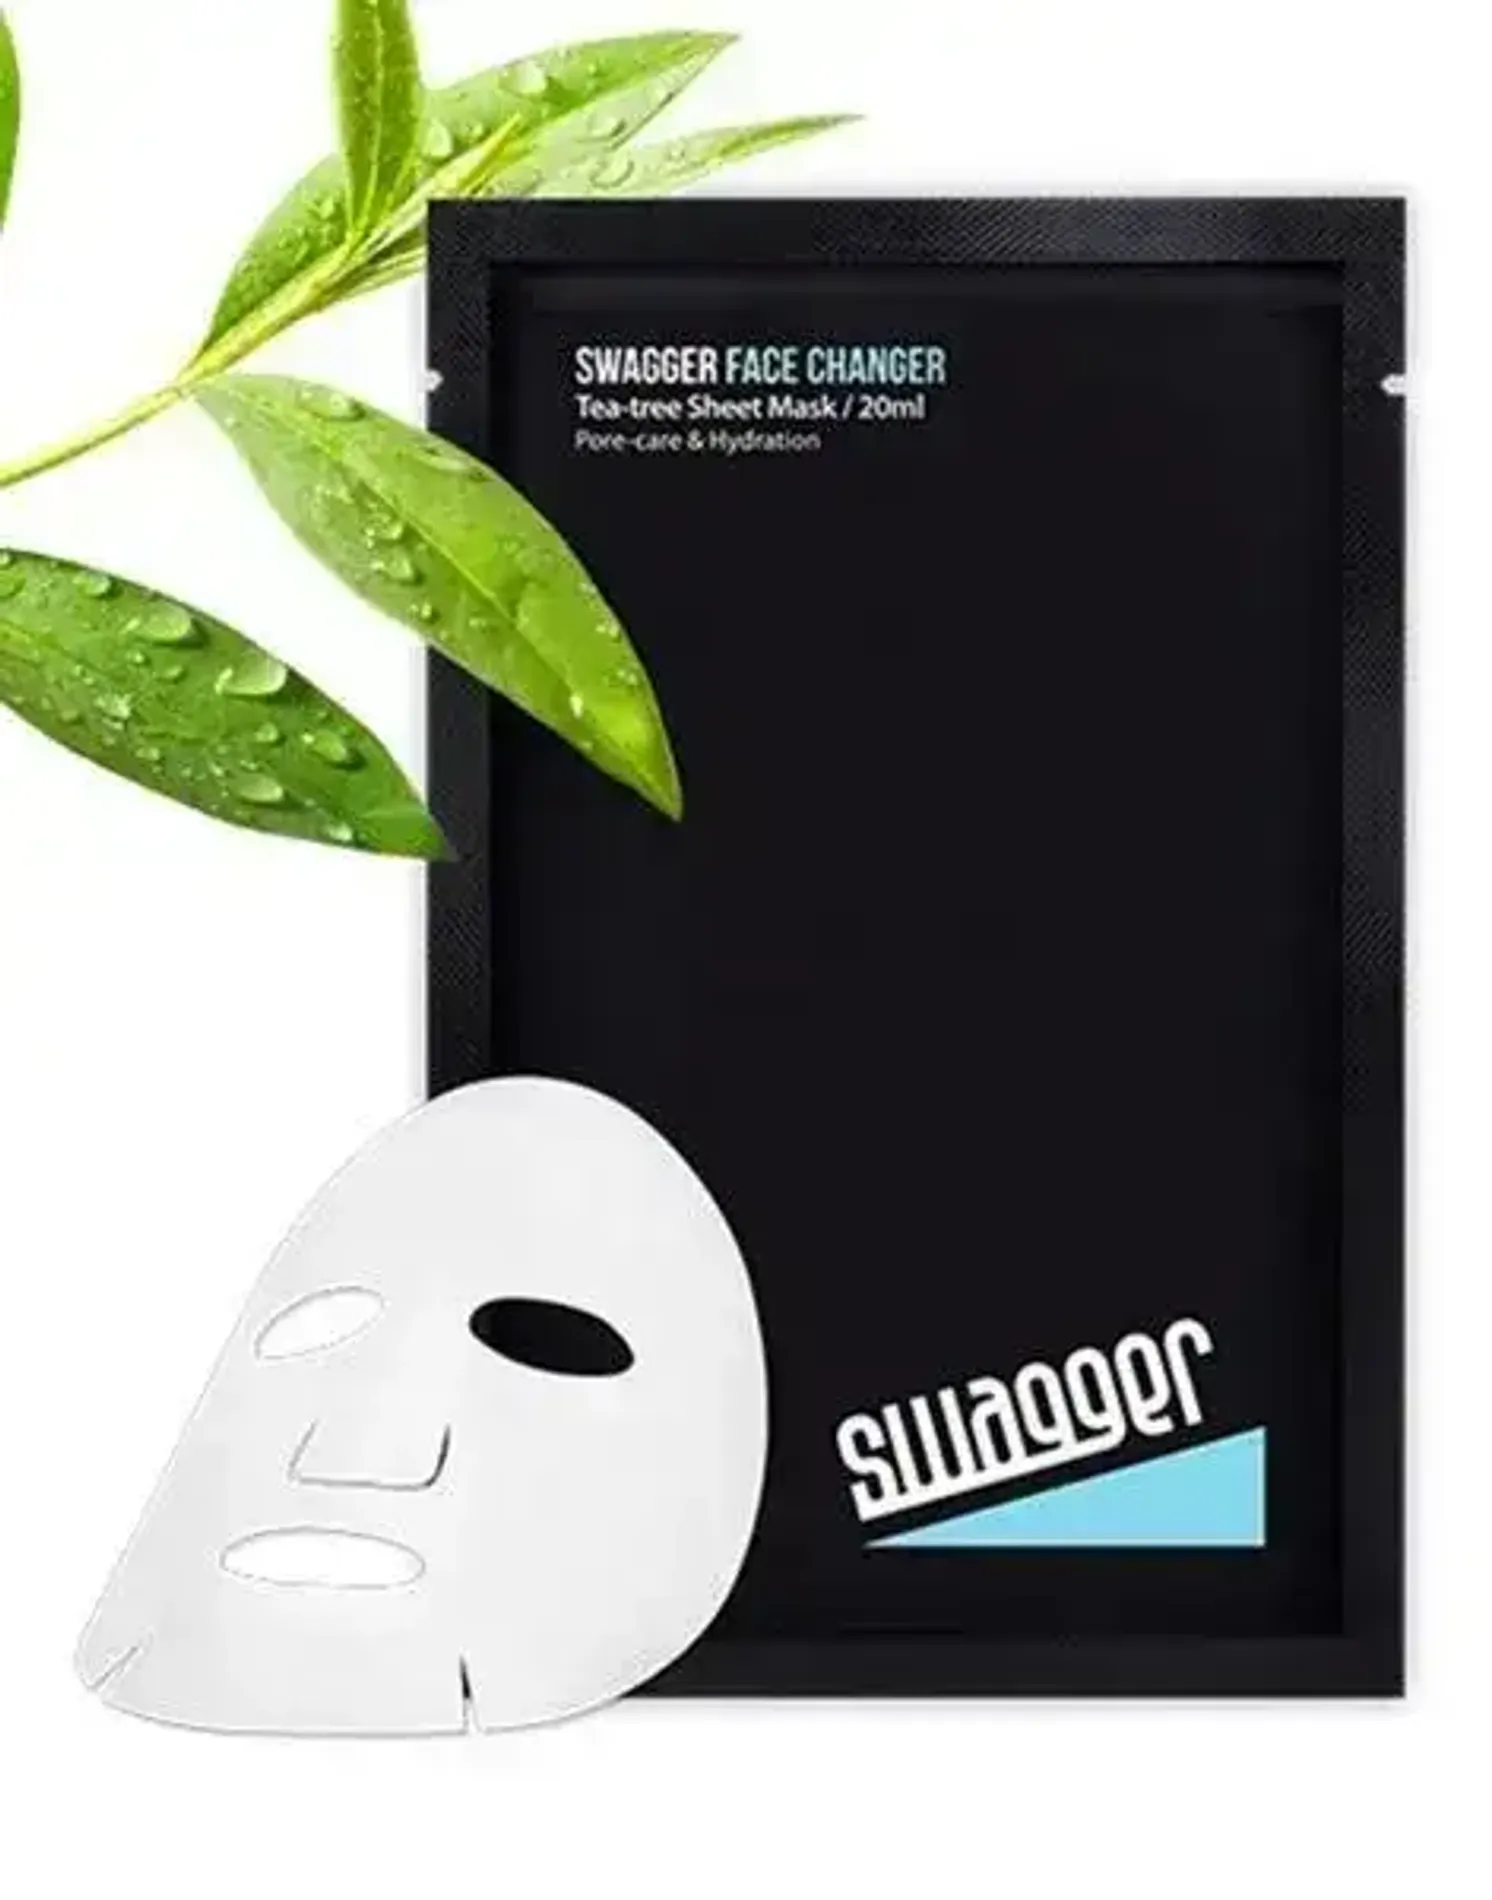 mat-na-giay-sheet-mask-swagger-face-changer-tea-tree-sheet-mask-20ml-1